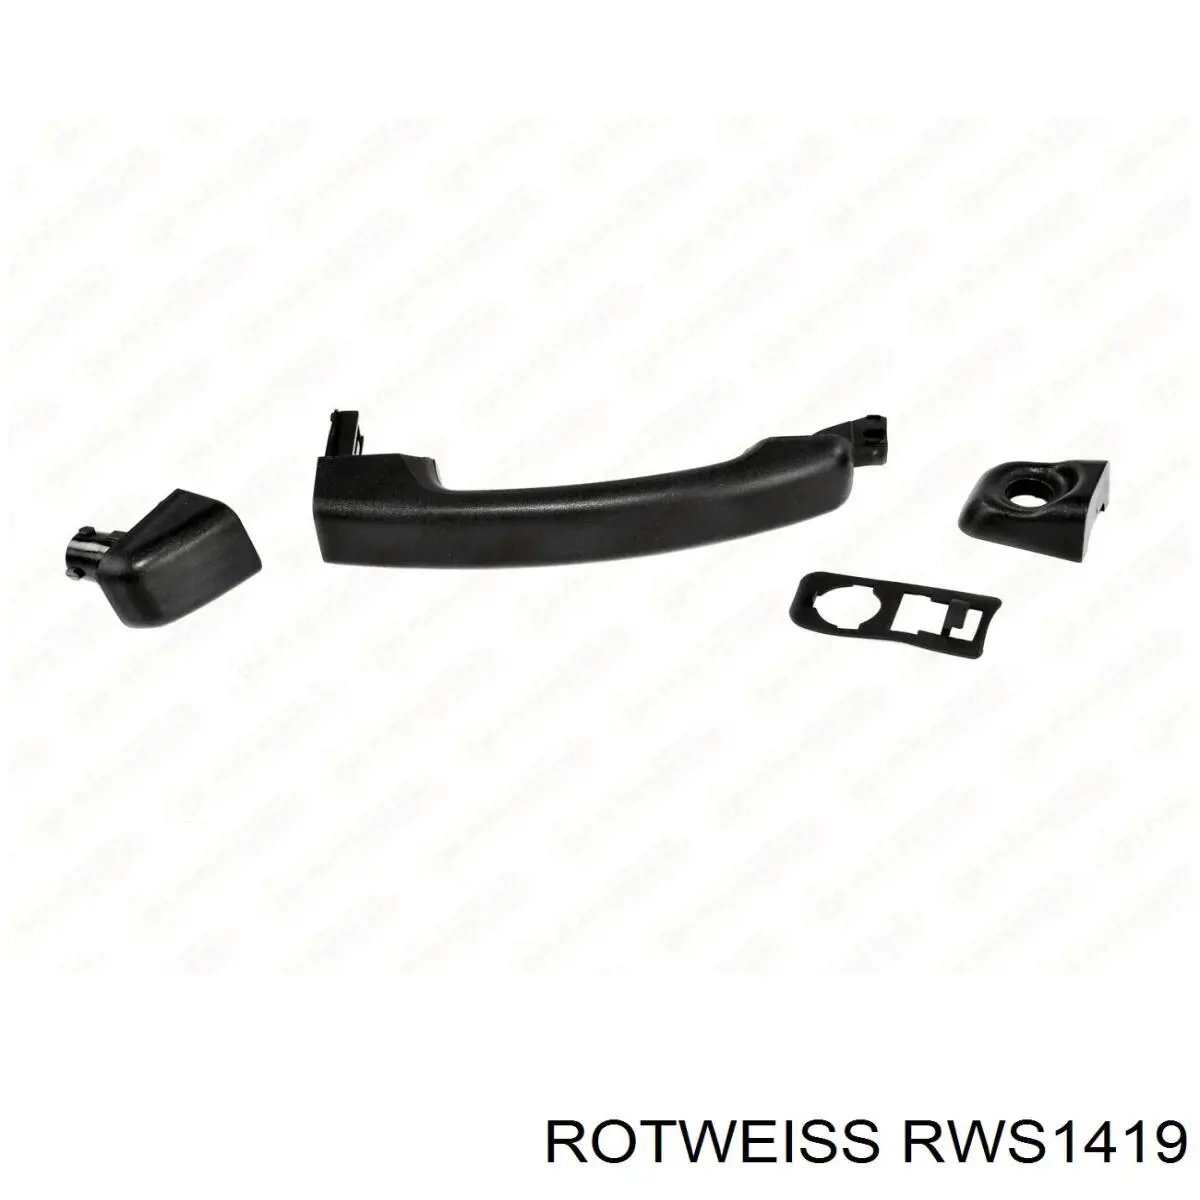 RWS1419 Rotweiss tirador de puerta exterior delantero